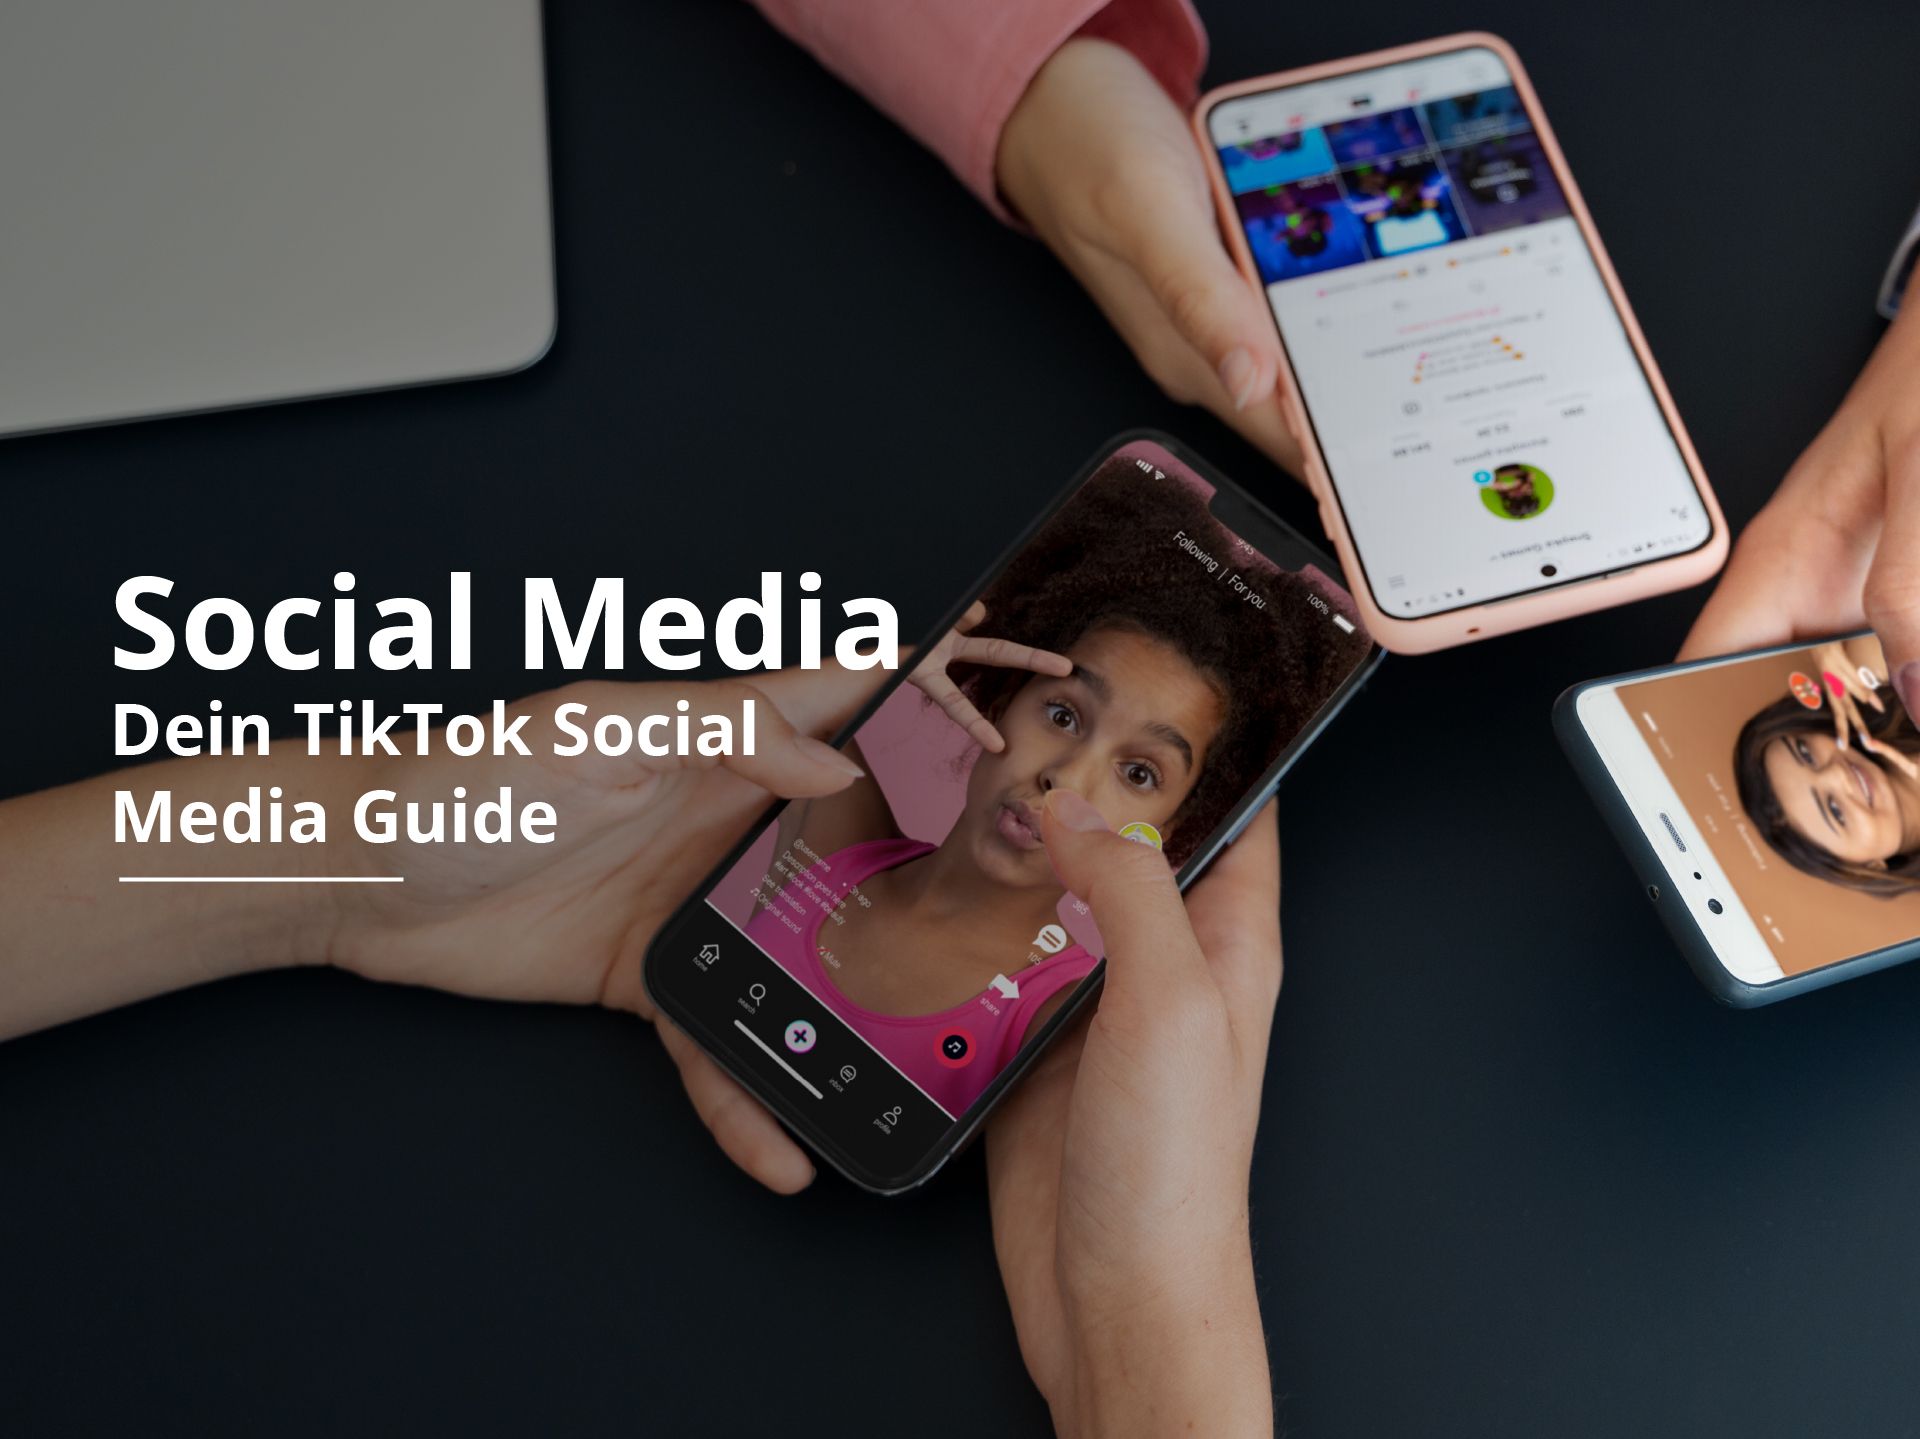 Dein TikTok Social Media Guide